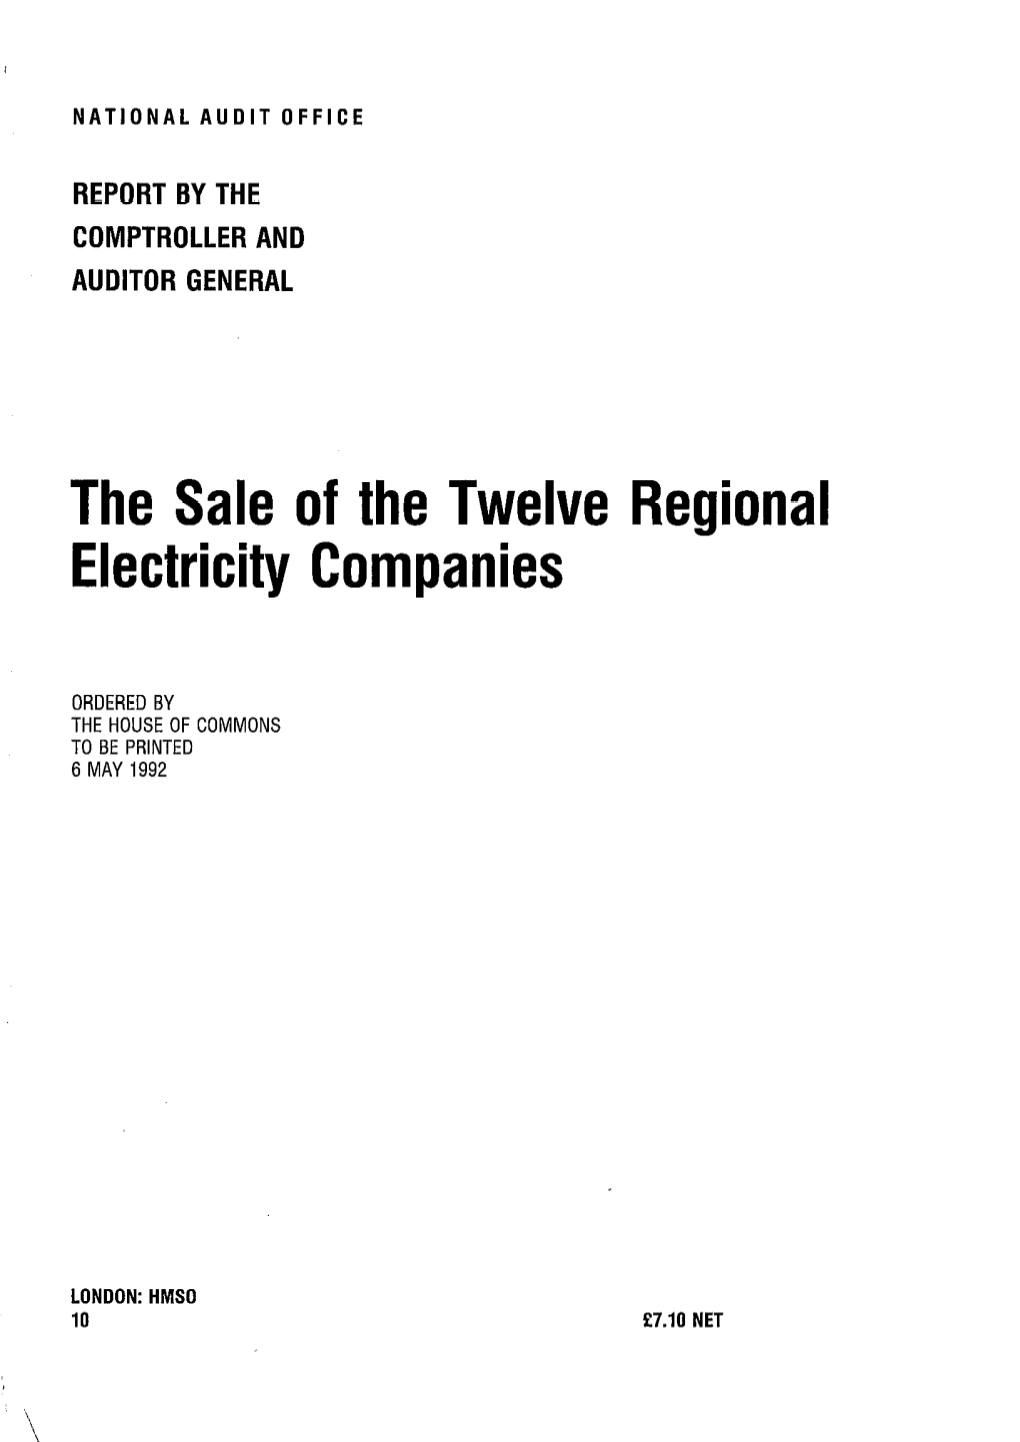 The Sale of the Twelve Regional Electricity Companies